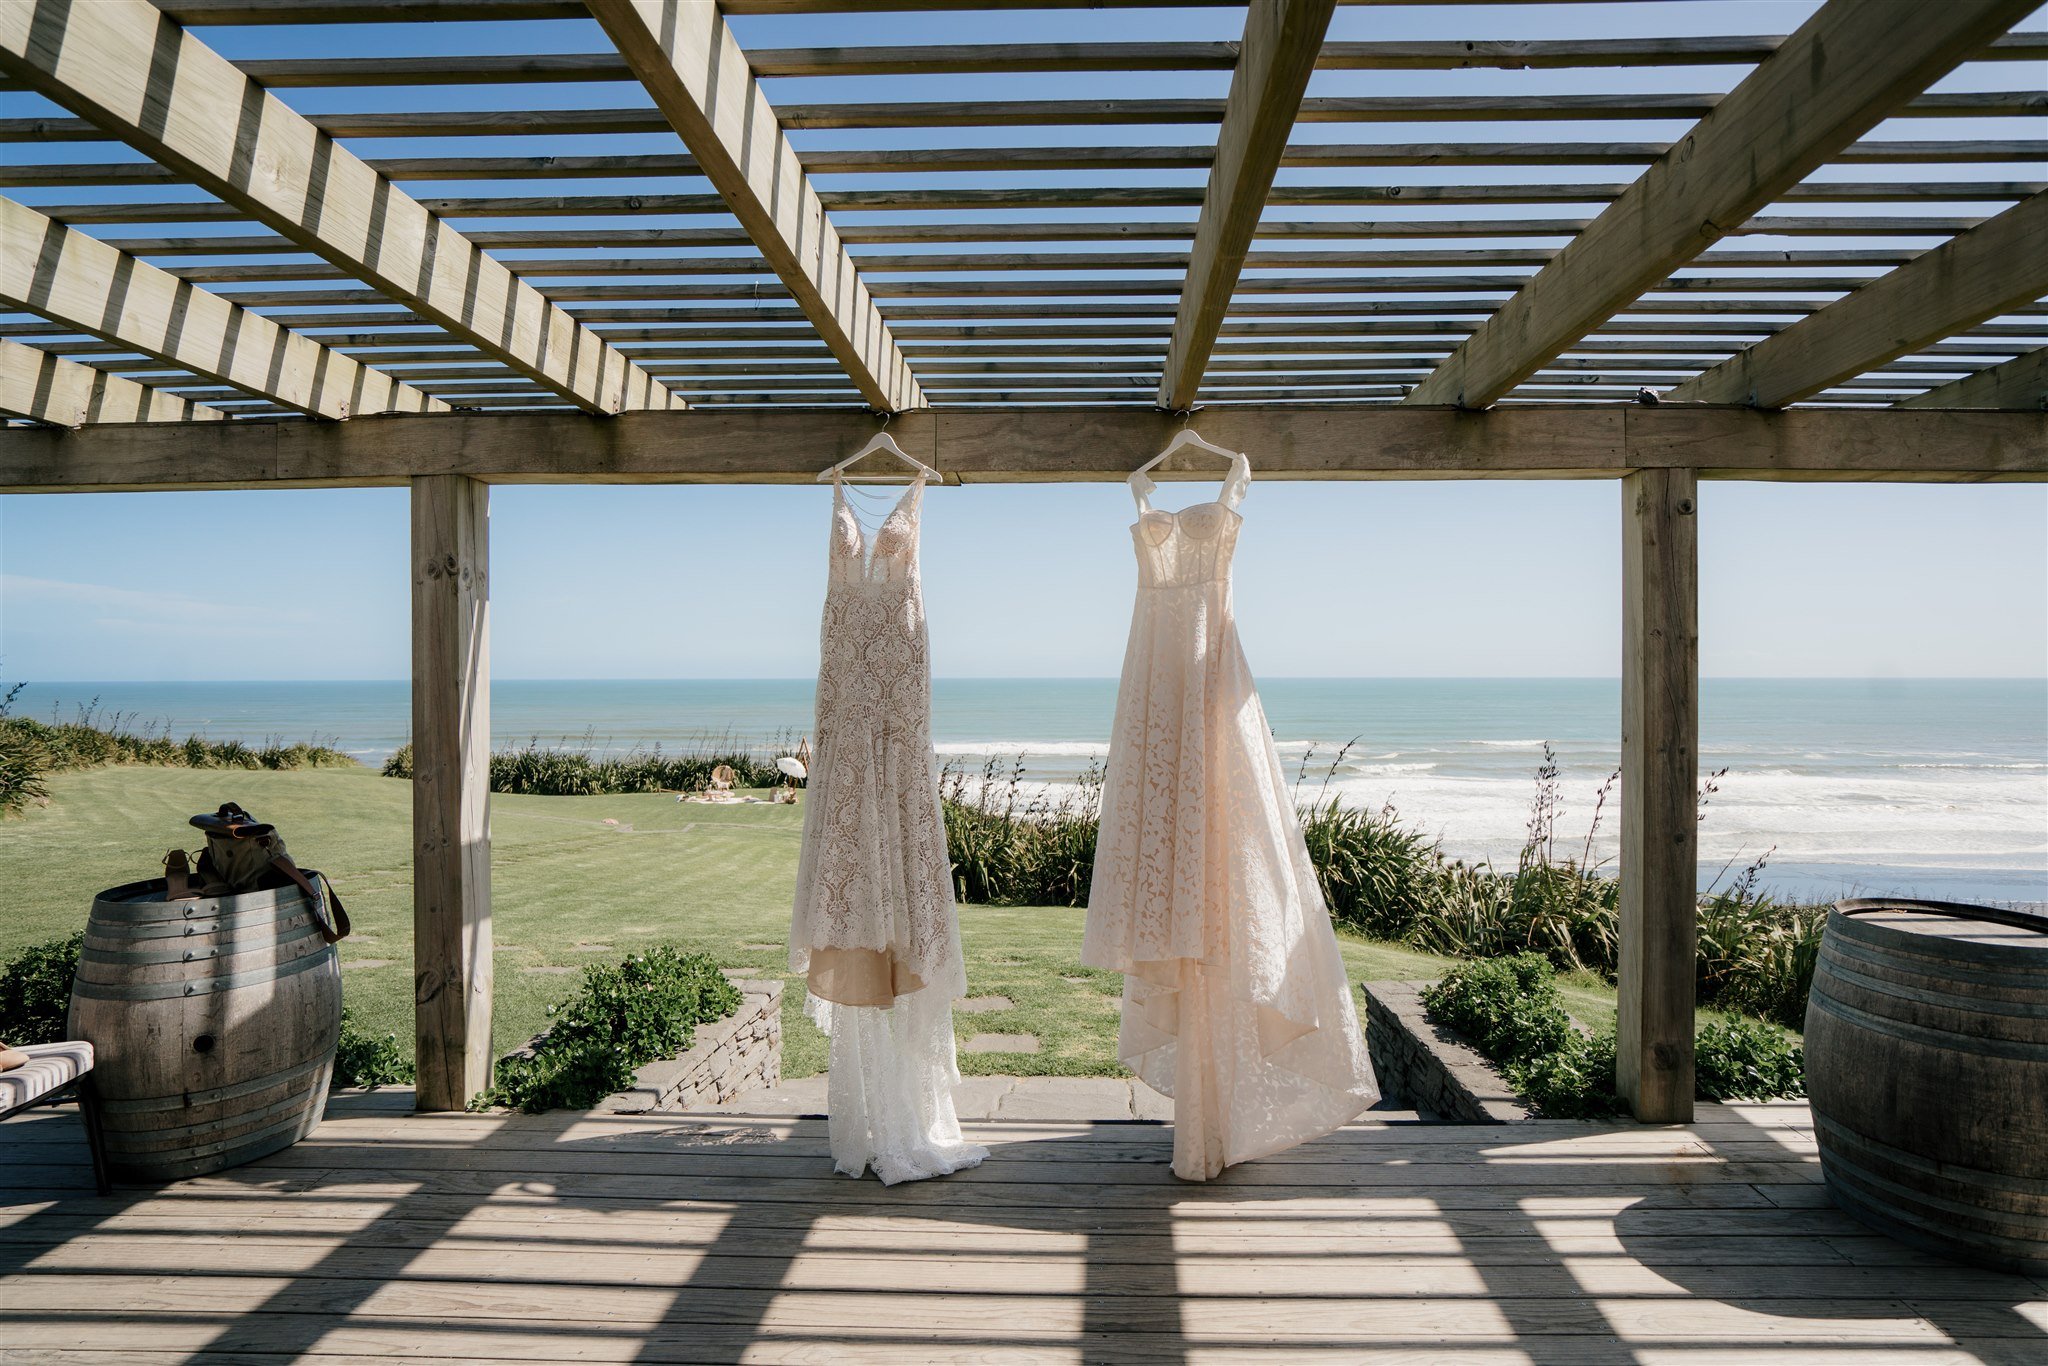 castaways-NZ-new-zealand-auckland-wedding-photographer-photography-videography-film-dear-white-productions-best-venue-waiuku-engagement-elopement-style-beach-intimate (26).jpg